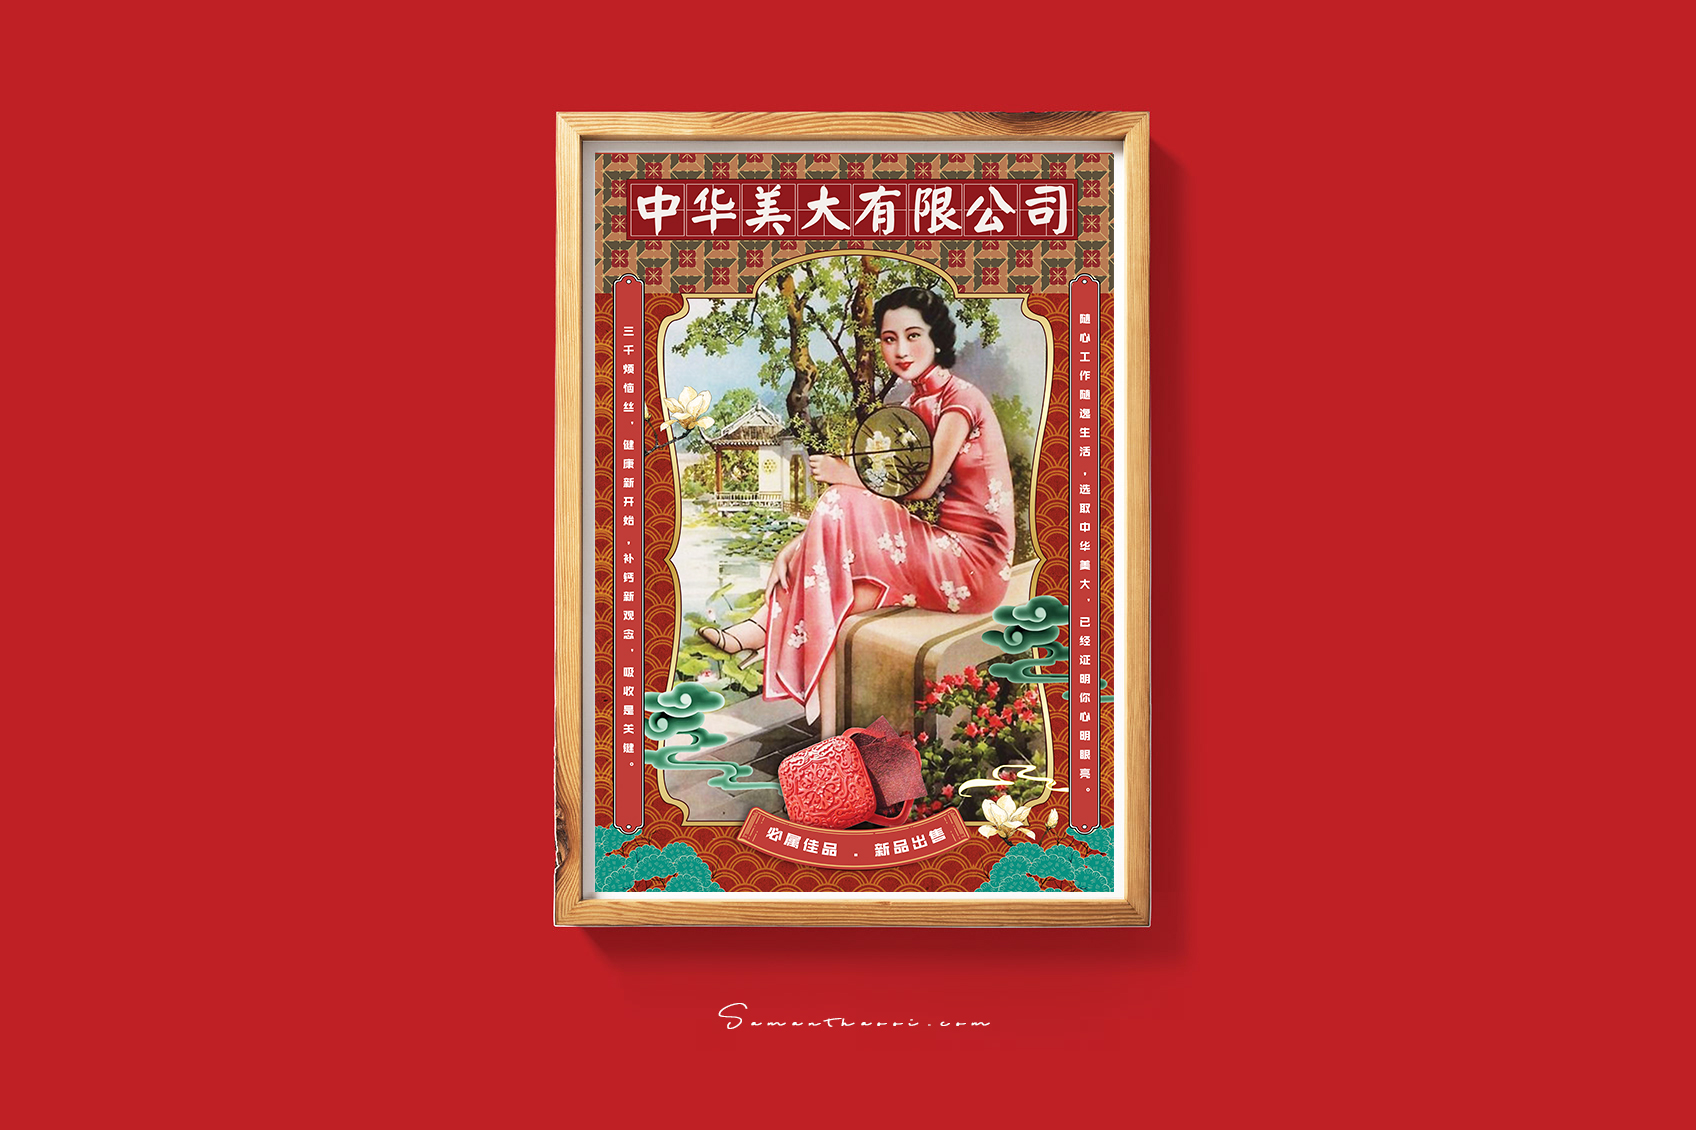 Old Shanghai Oriental Theme Poster